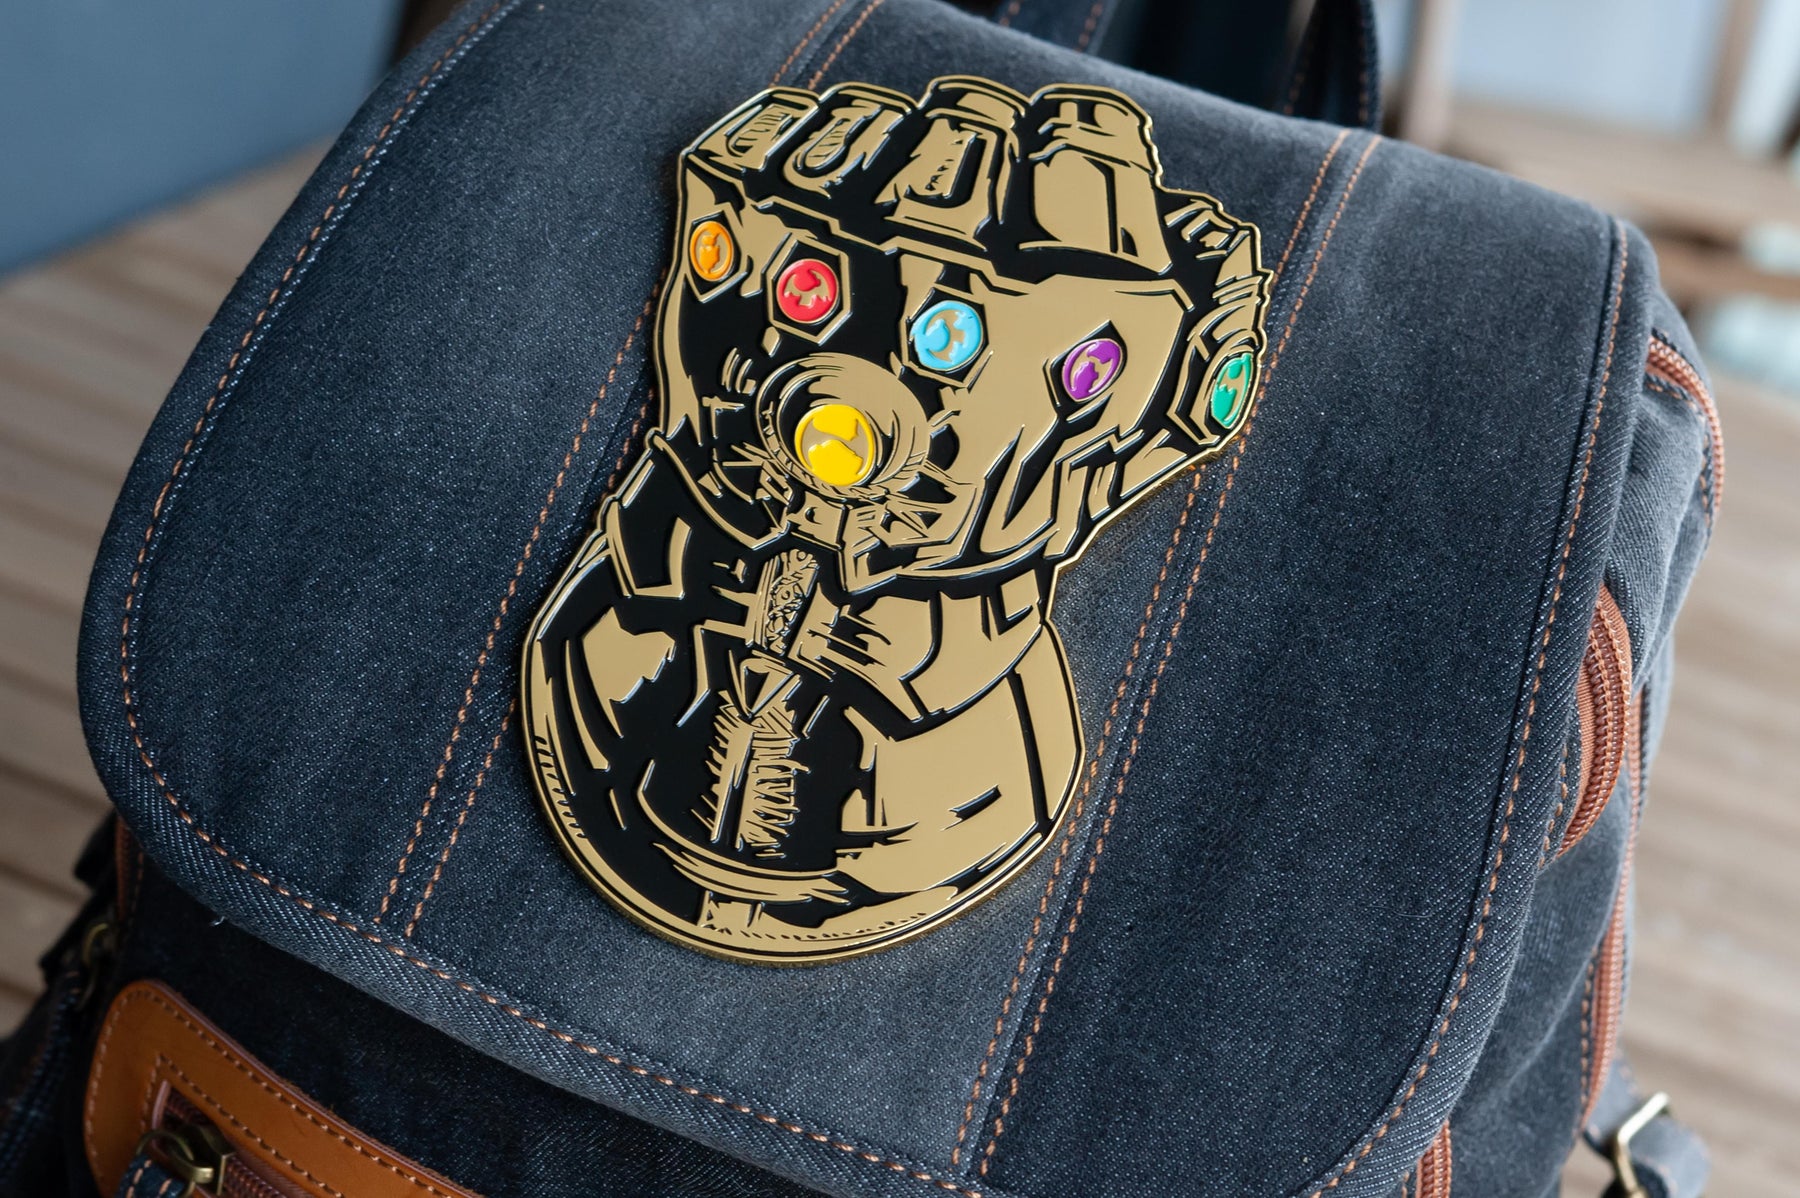 Marvel Avengers: Endgame Infinity Gauntlet Pin | Huge Oversize Pin | 6 Inches